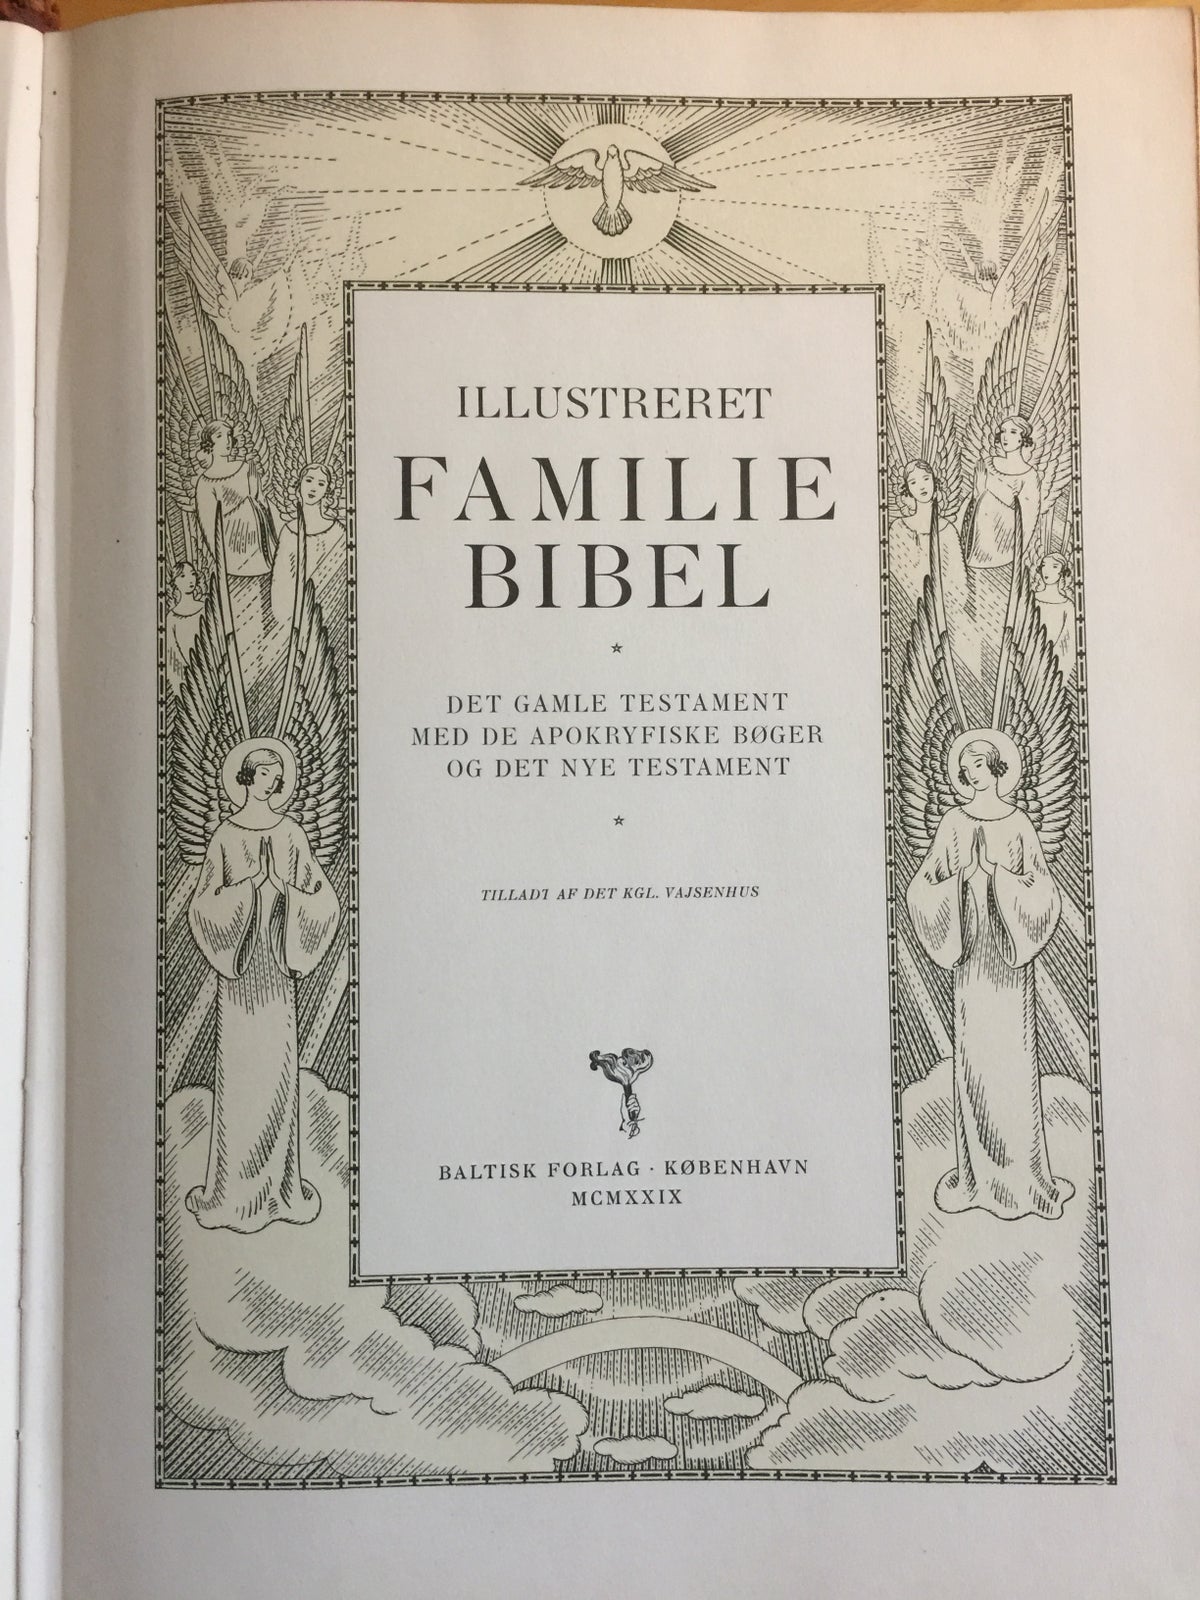 Illustreret Familiebibel, Baltisk Forlag, år 1929